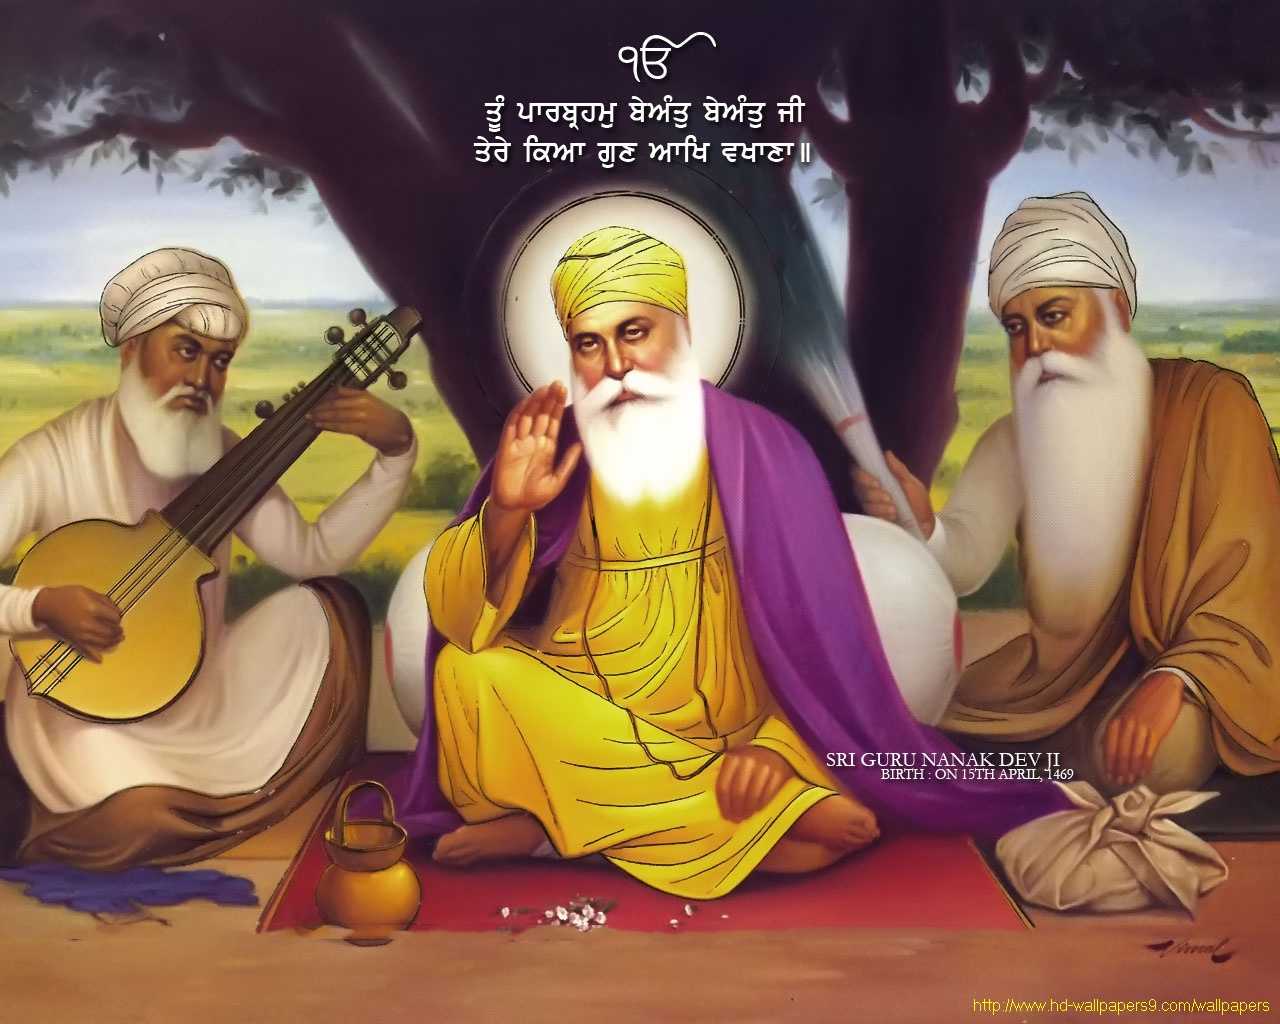 Gods Sikhism Wallpapers021 Gods Sikhism Wallpapers020 Gods Sikhism